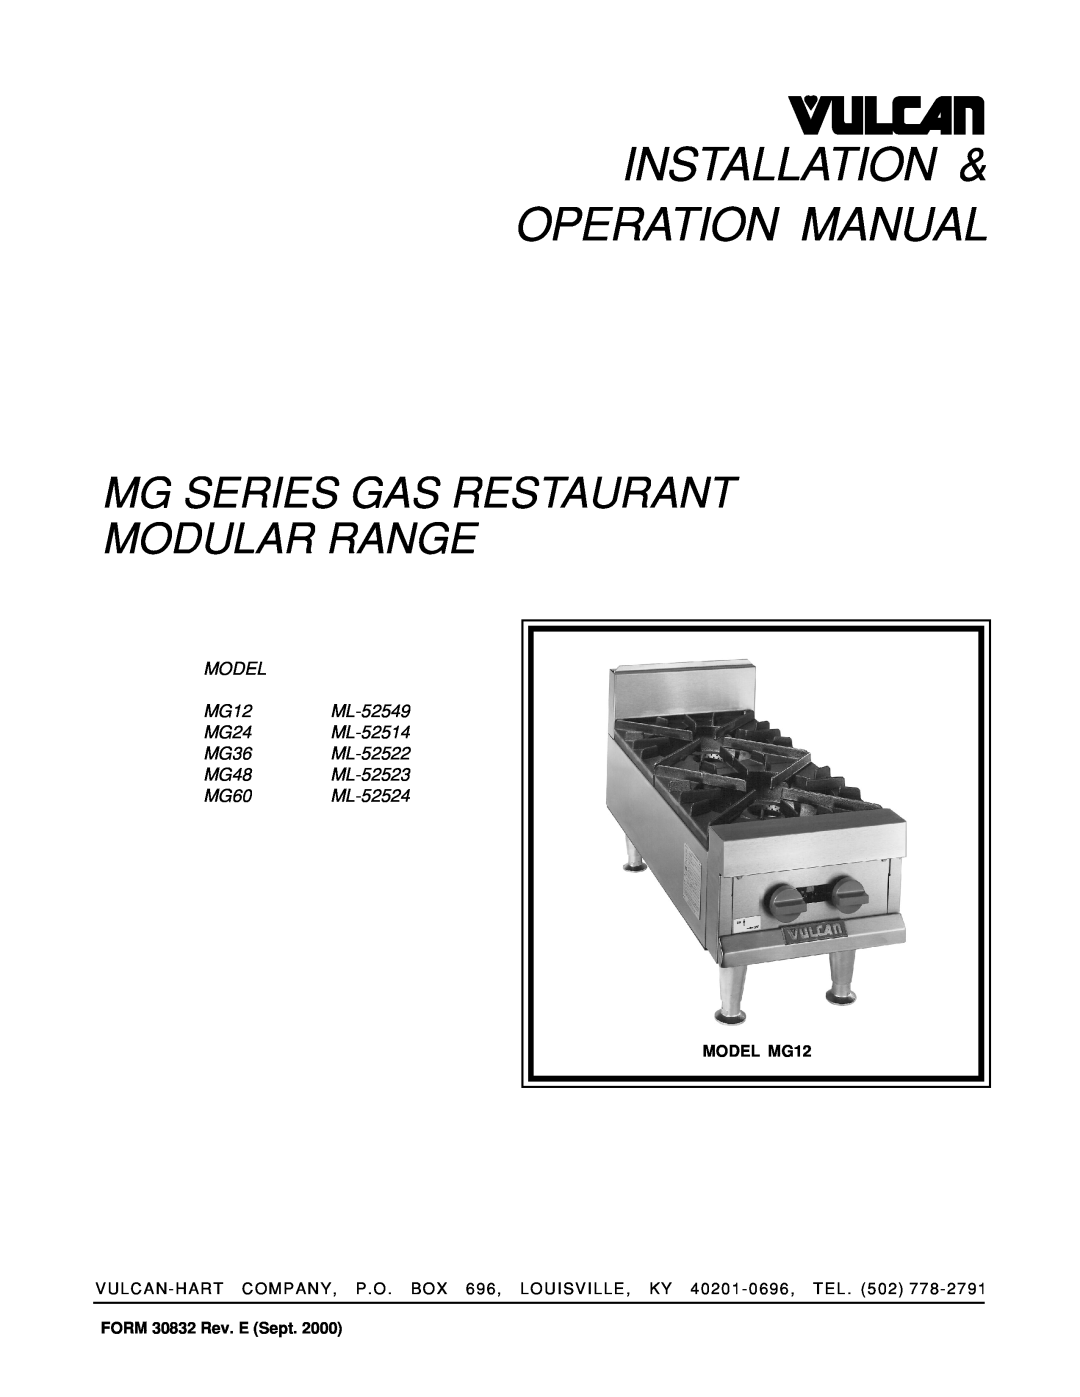 Vulcan-Hart MG60 ML-52524 operation manual Mg Series Gas Restaurant Modular Range, MG48ML-52523 MG60ML-52524, MODEL MG12 